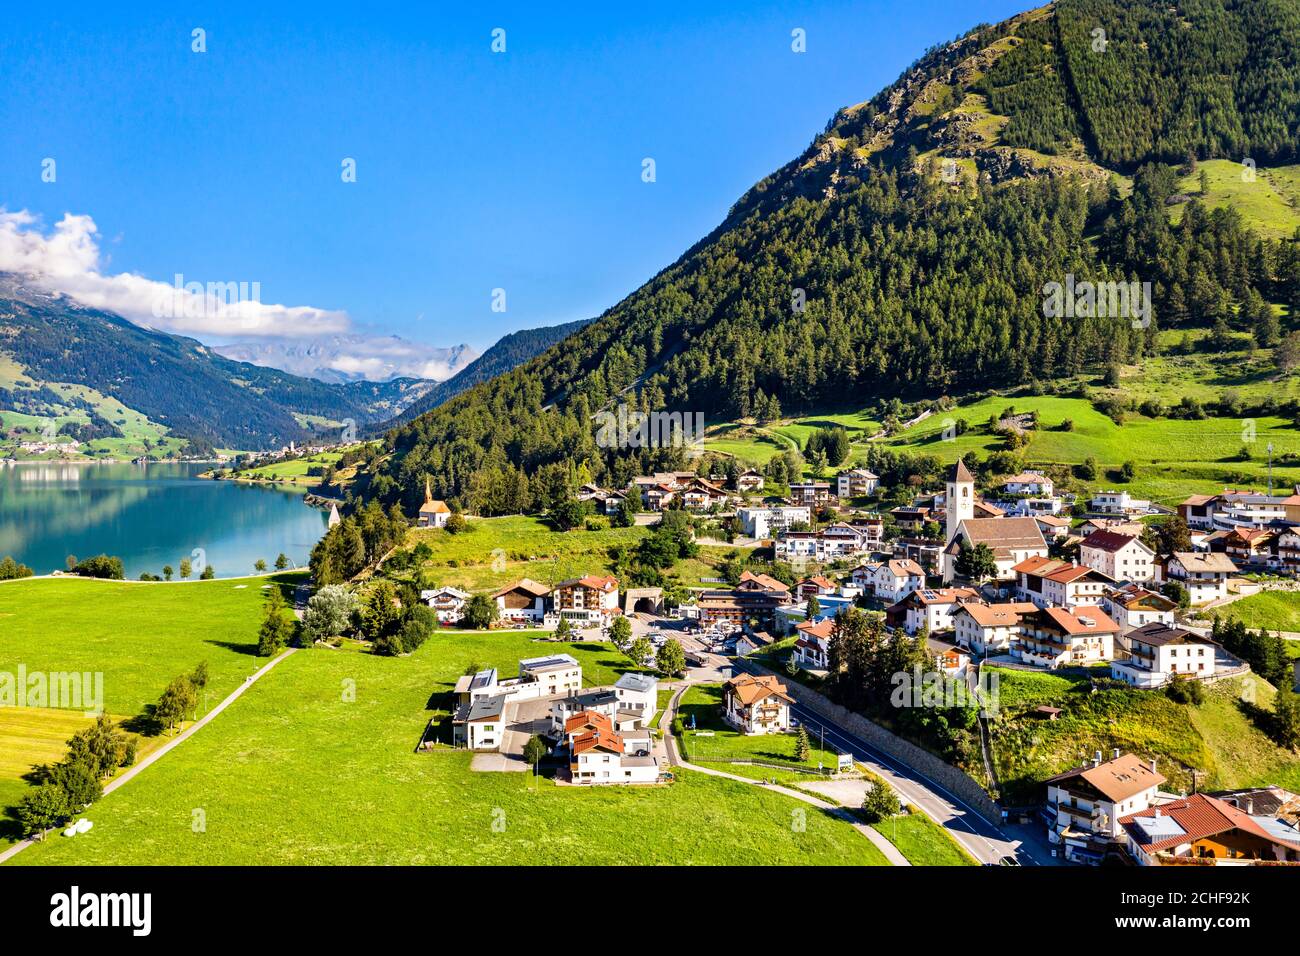 Graun im Vinschgau, a town on Lake Reschen in South Tyrol, Italy Stock Photo